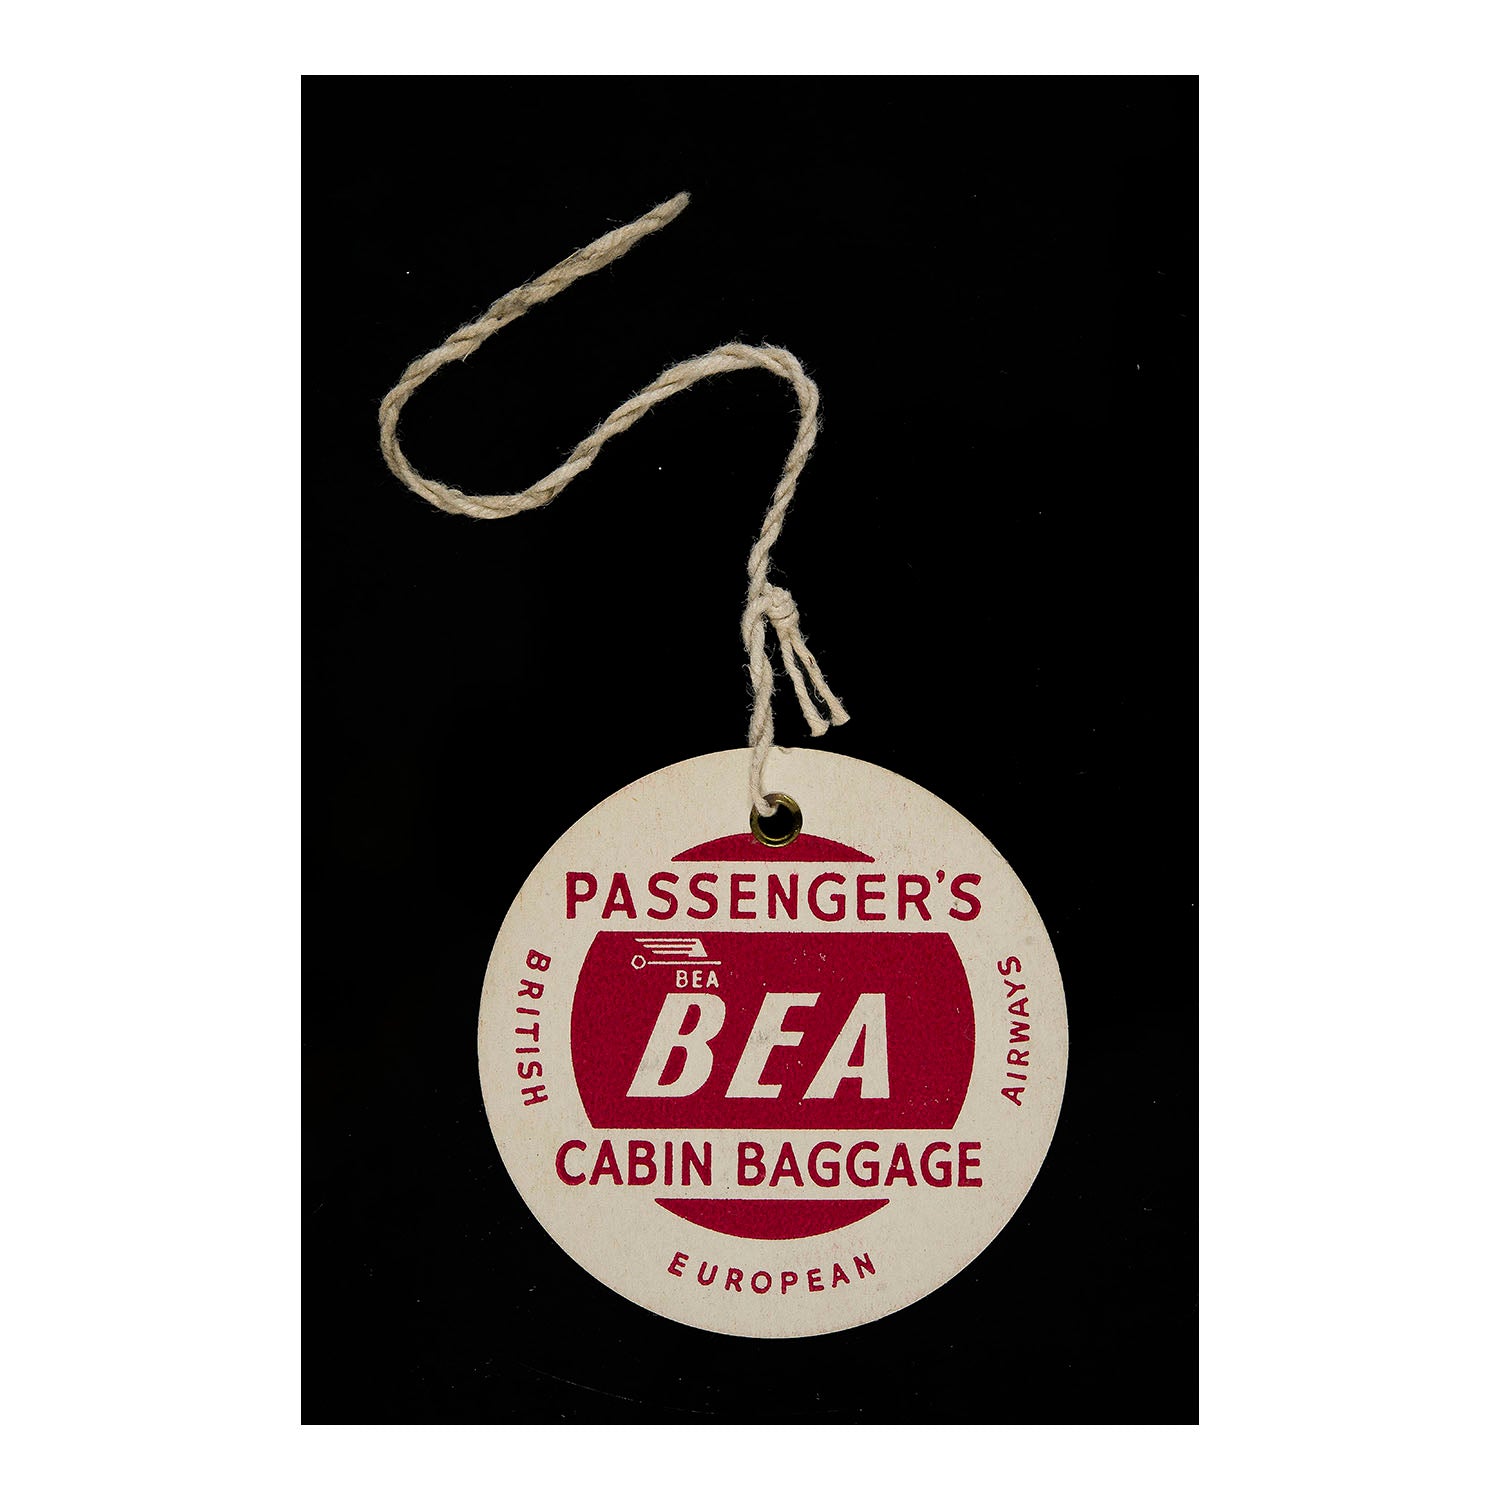 British European Airways Cabin Baggage tag